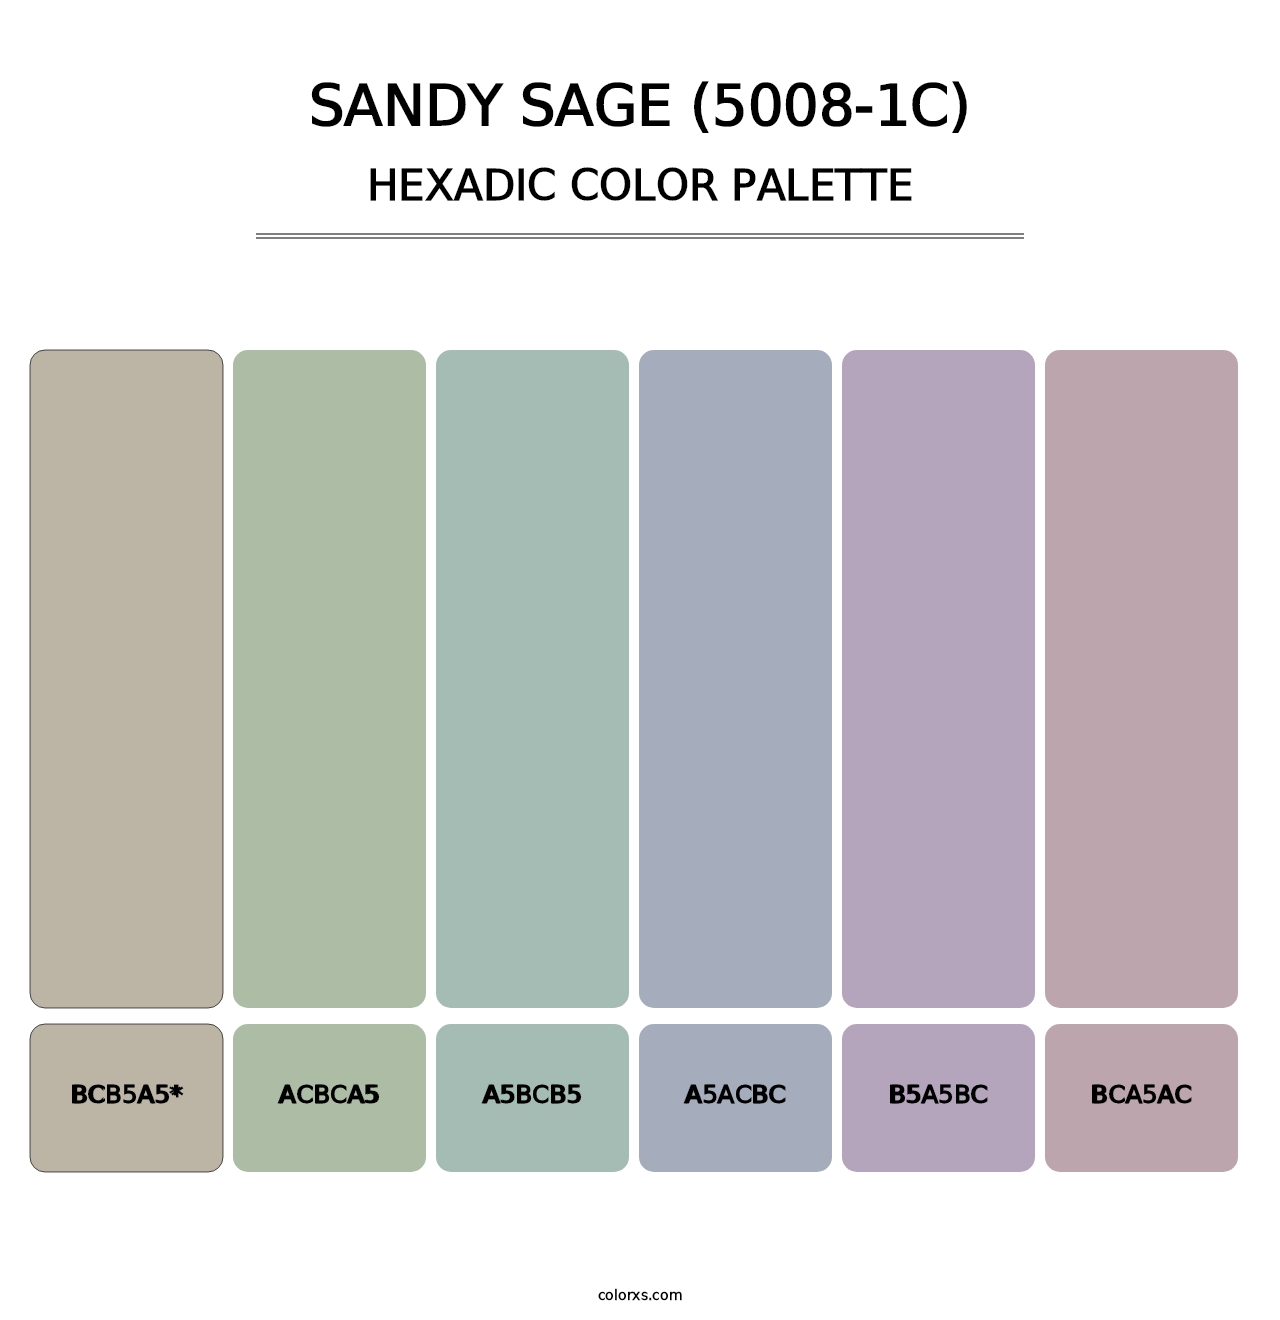 Sandy Sage (5008-1C) - Hexadic Color Palette